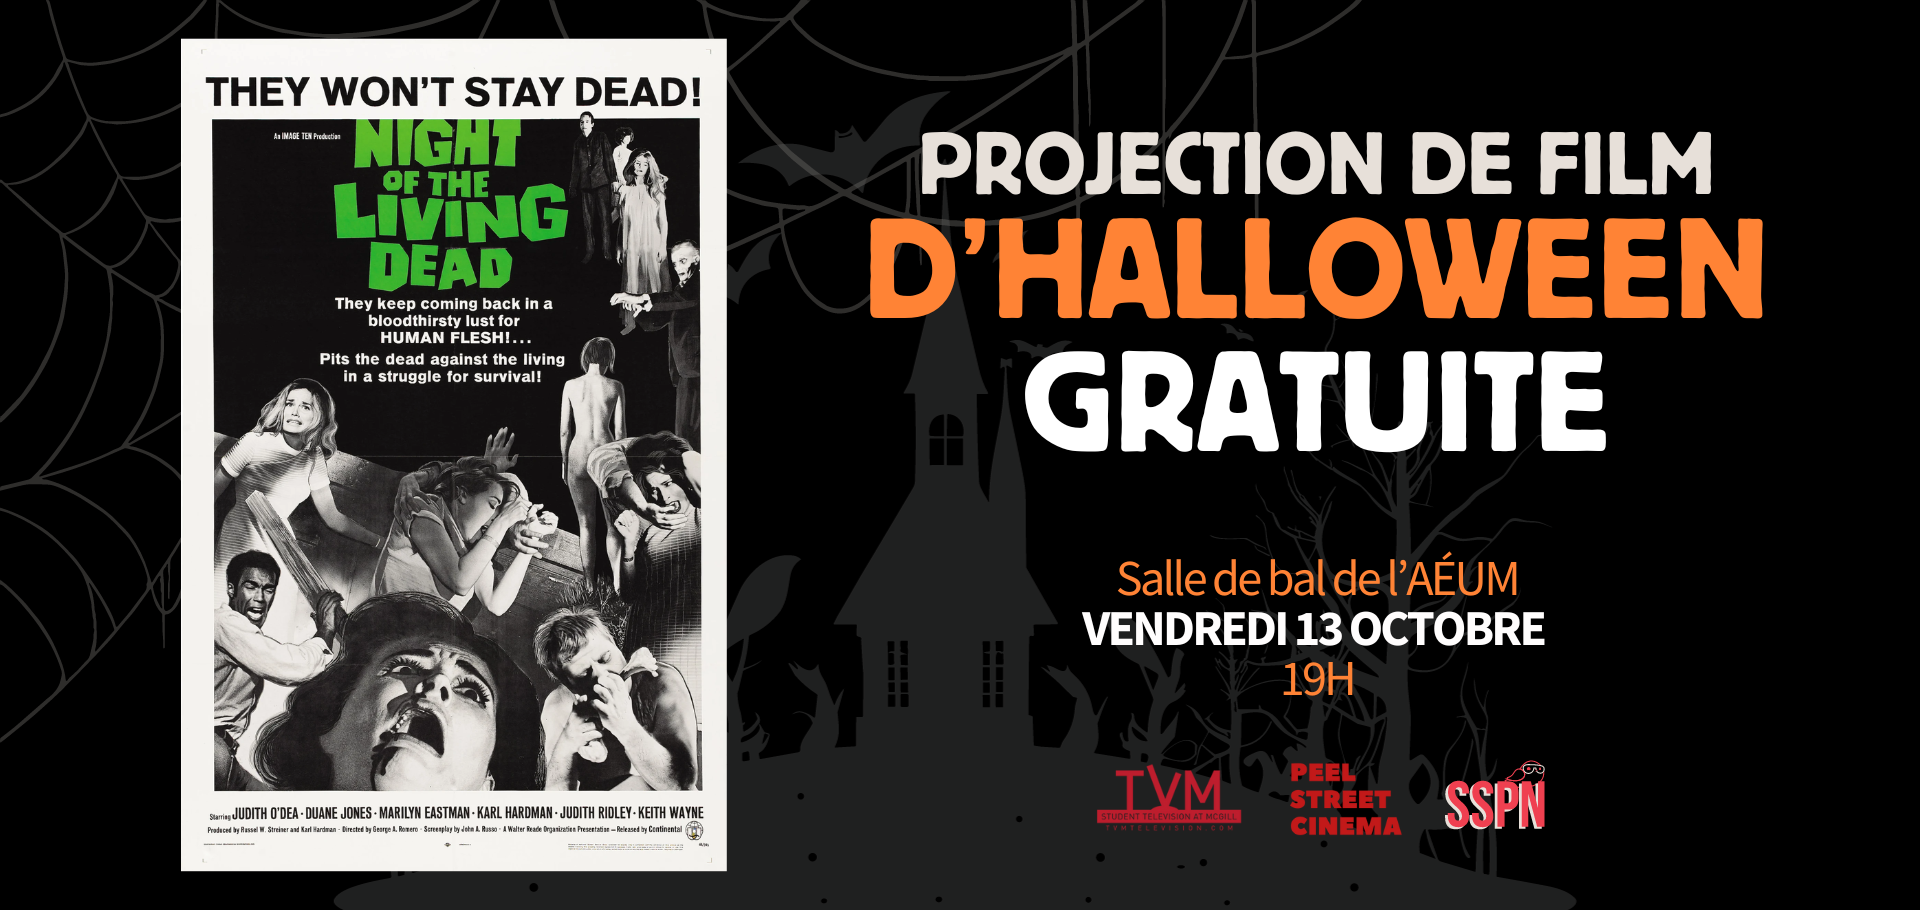 PROJECTION DE FILM D'HALLOWEEN GRATUITE